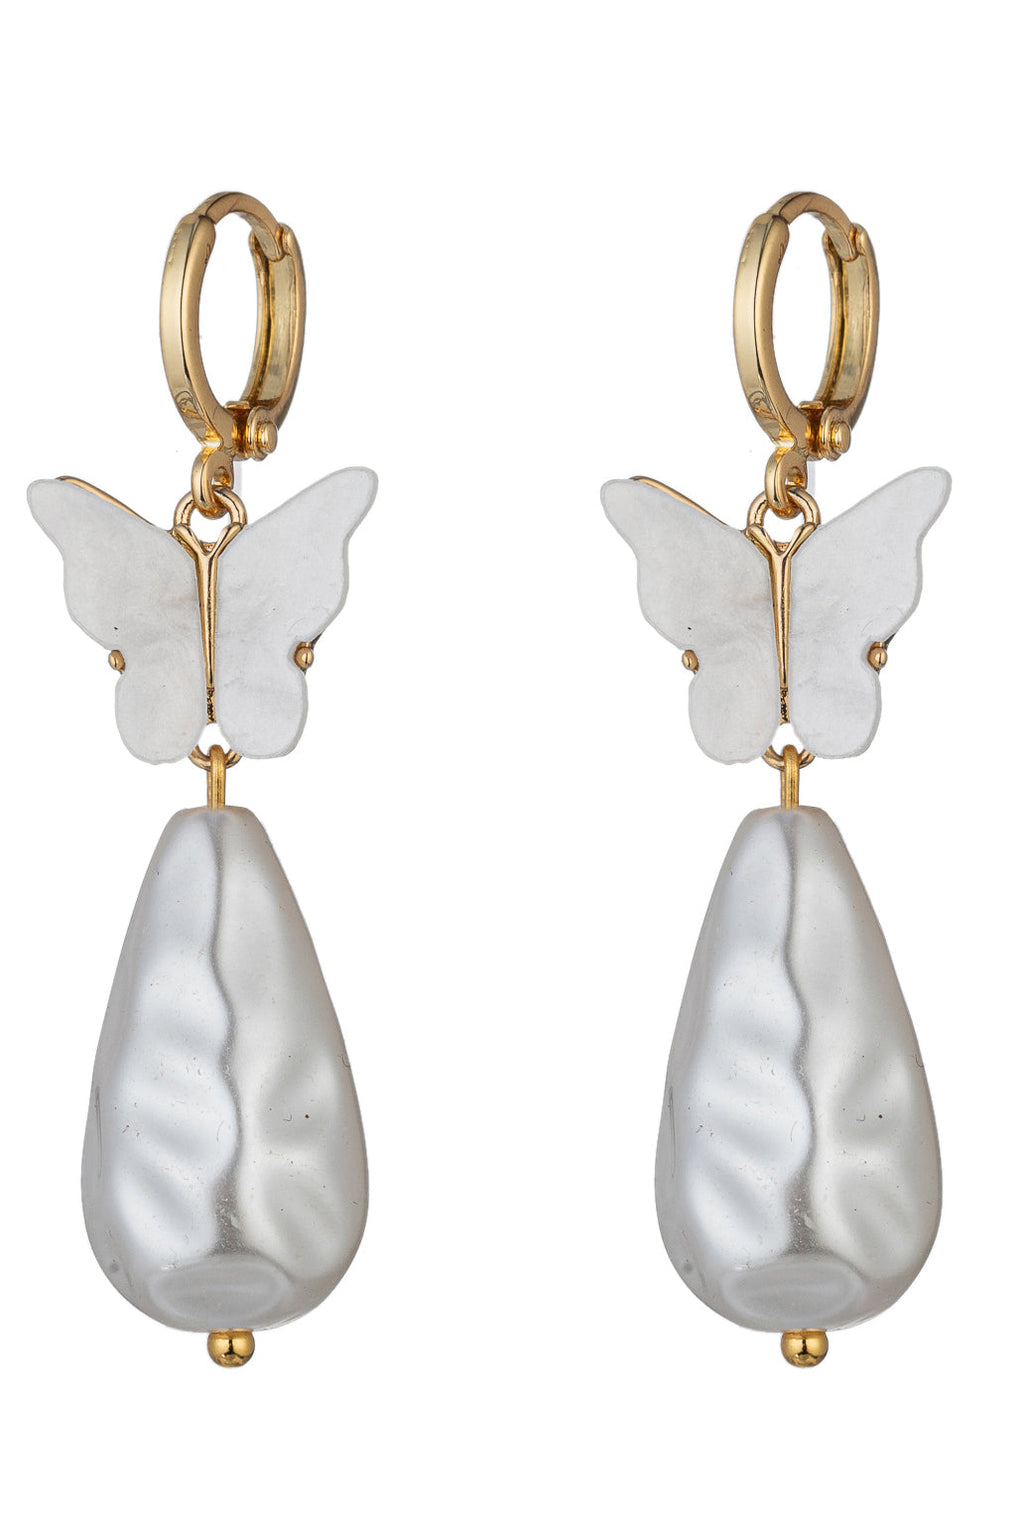 Manon Butterfly Cubic Zirconia Shell Pearl Earrings: Graceful Wings and Lustrous Pearls Take Flight.